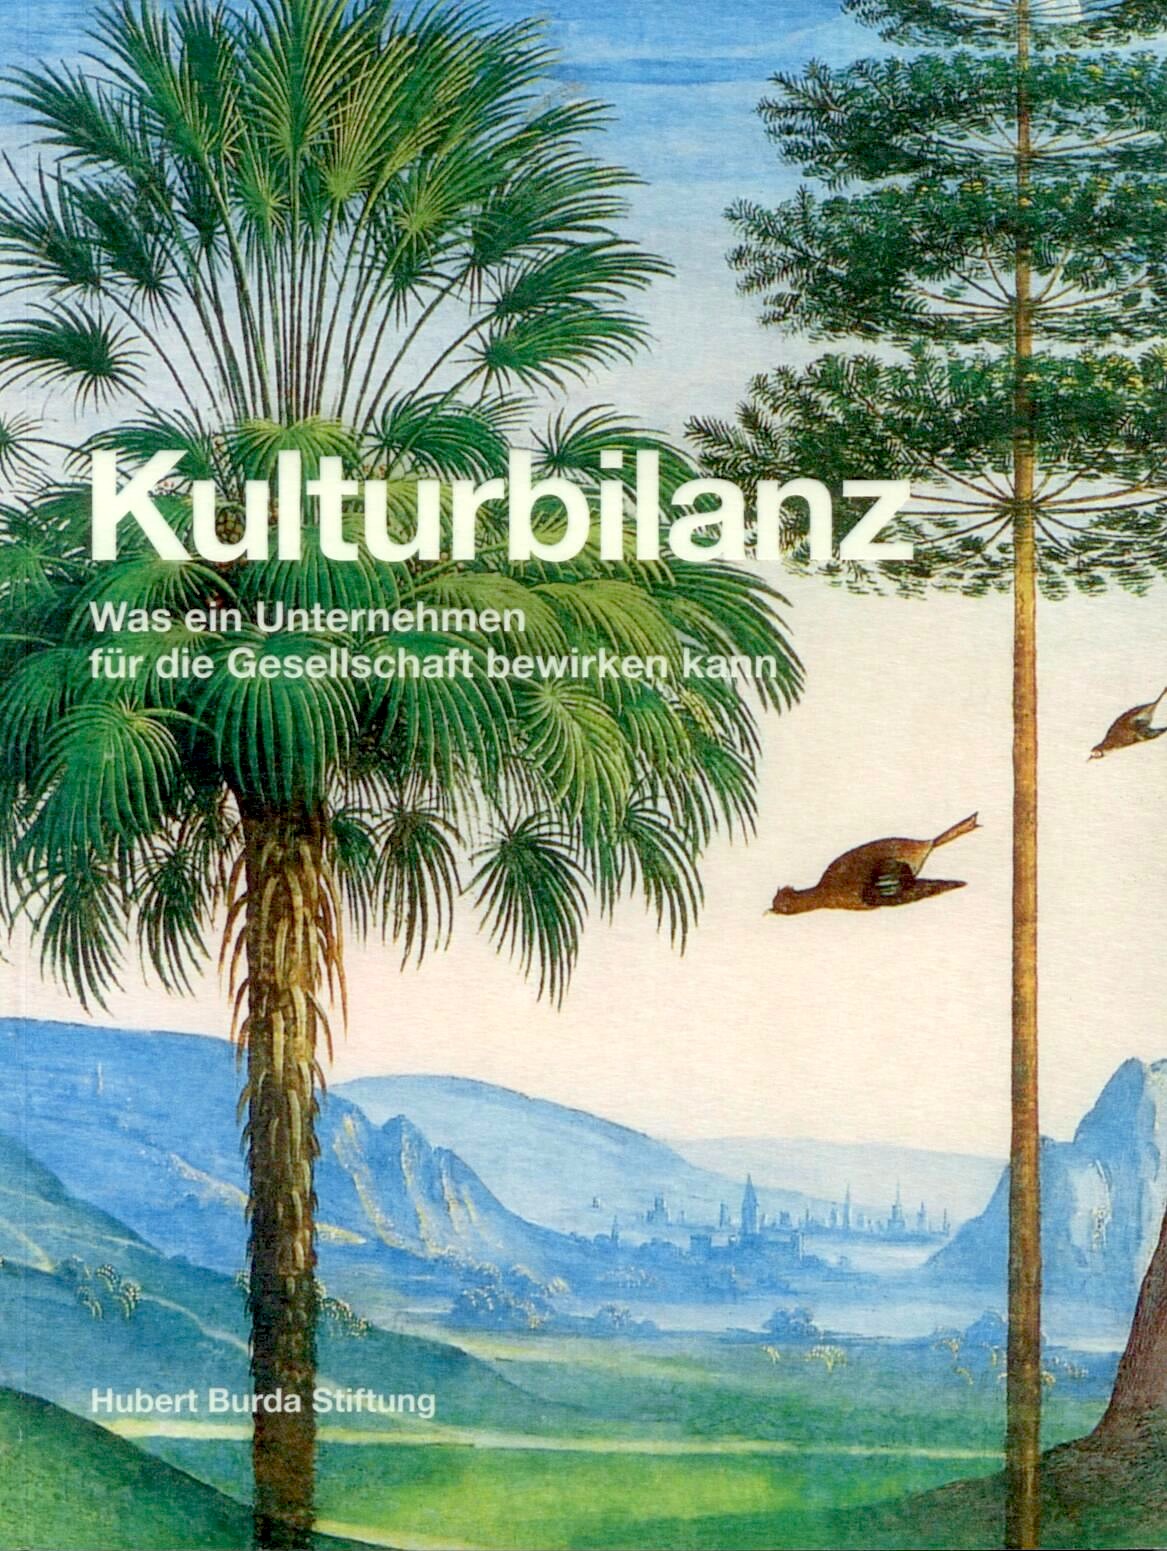 Kulturbilanz - Hubert Burda Stiftung, Bild: Cover.